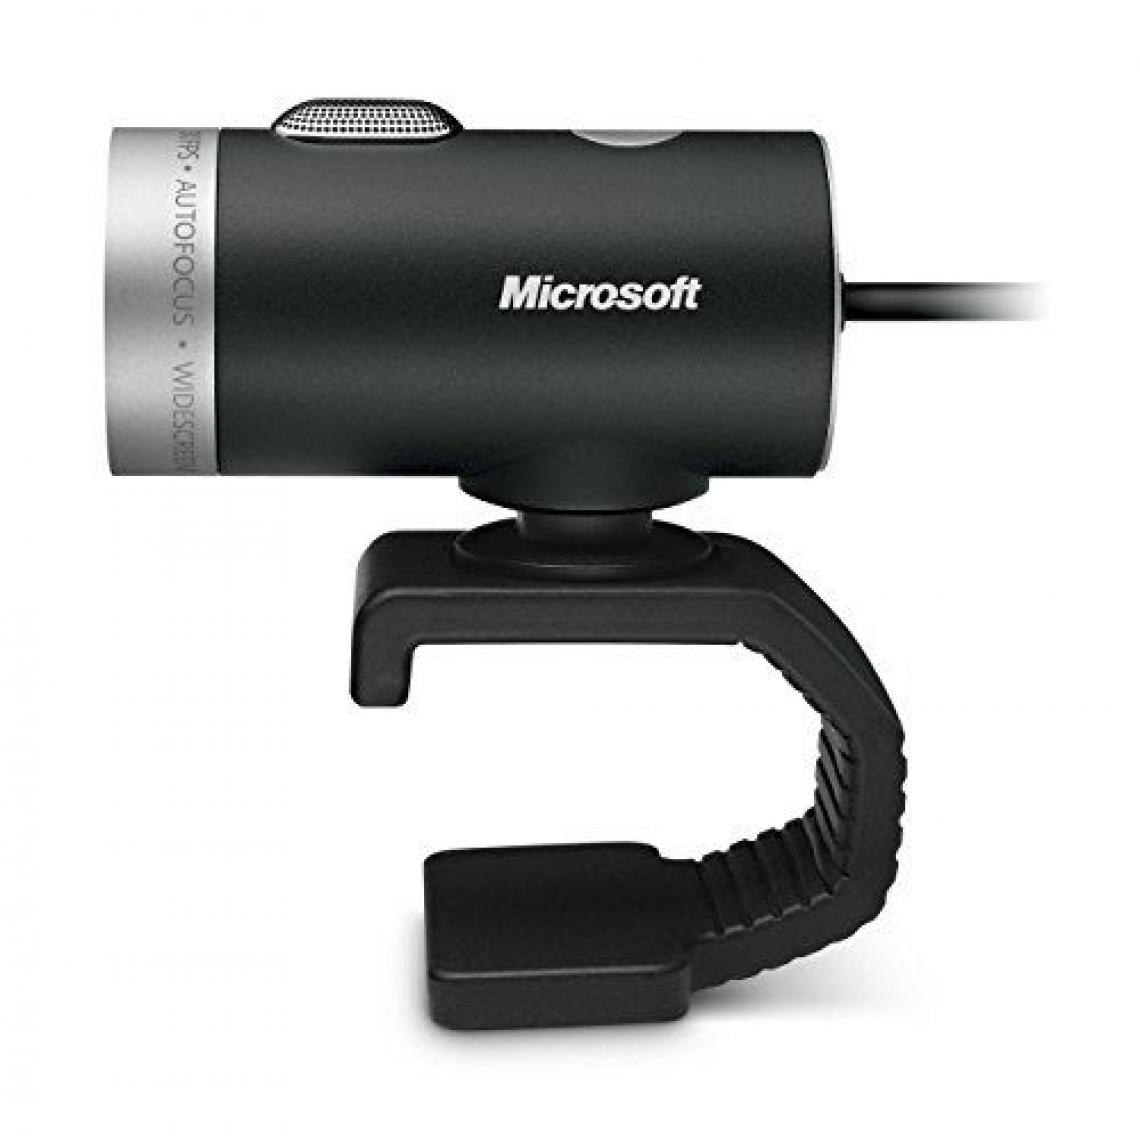 Microsoft - Microsoft LifeCam Cinema Webcam - Caméra de surveillance connectée